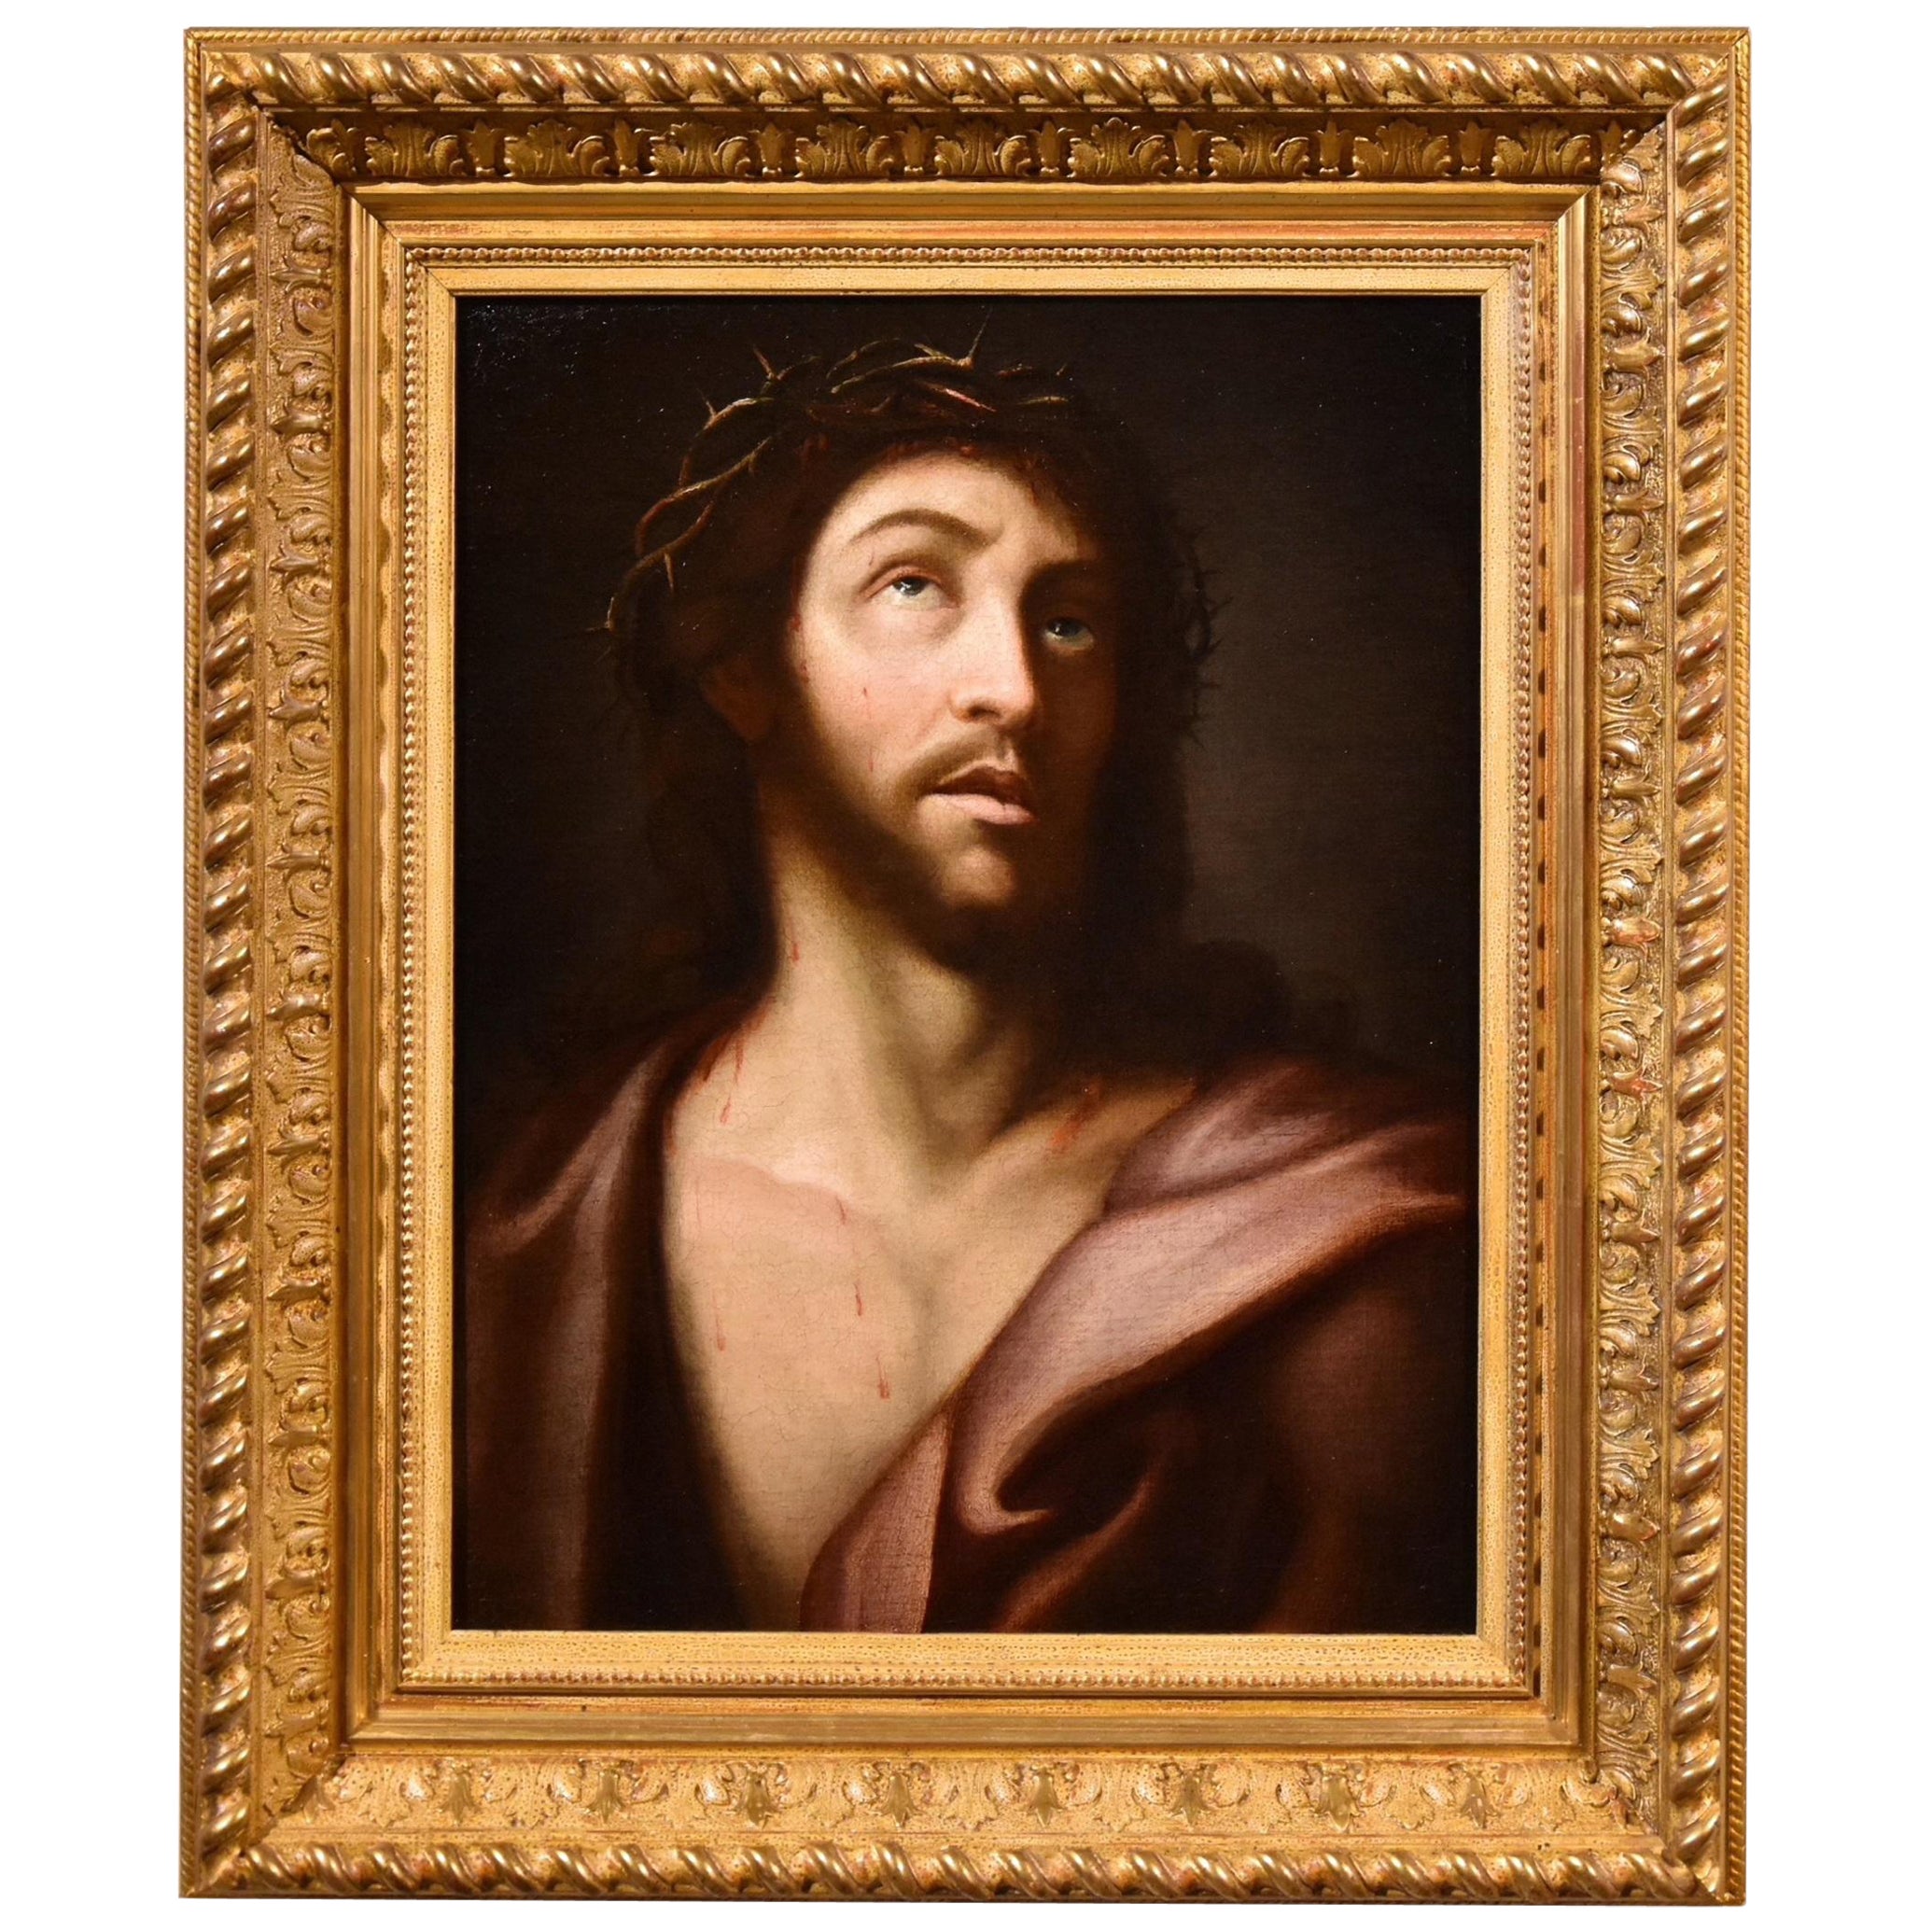 Lombard painter of the 17th century Portrait Painting – Ecce Homo Christ, Gemälde auf Leinwand, 17. Jahrhundert, Alter Meister Leonardo 